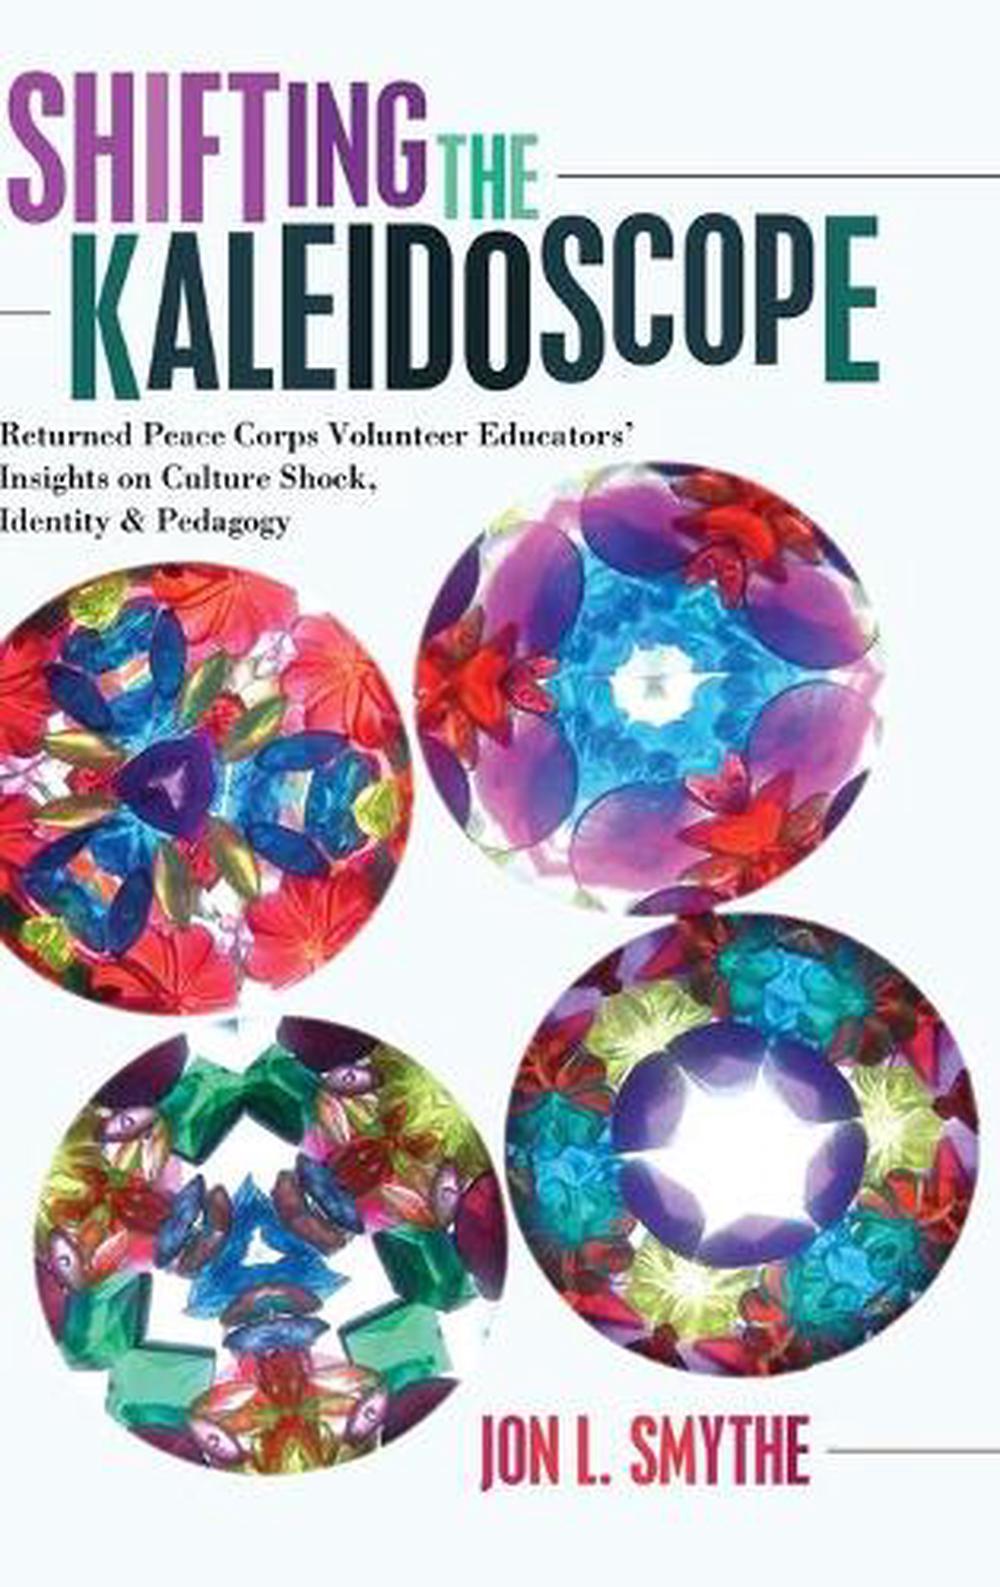 kaleidoscope image reverse